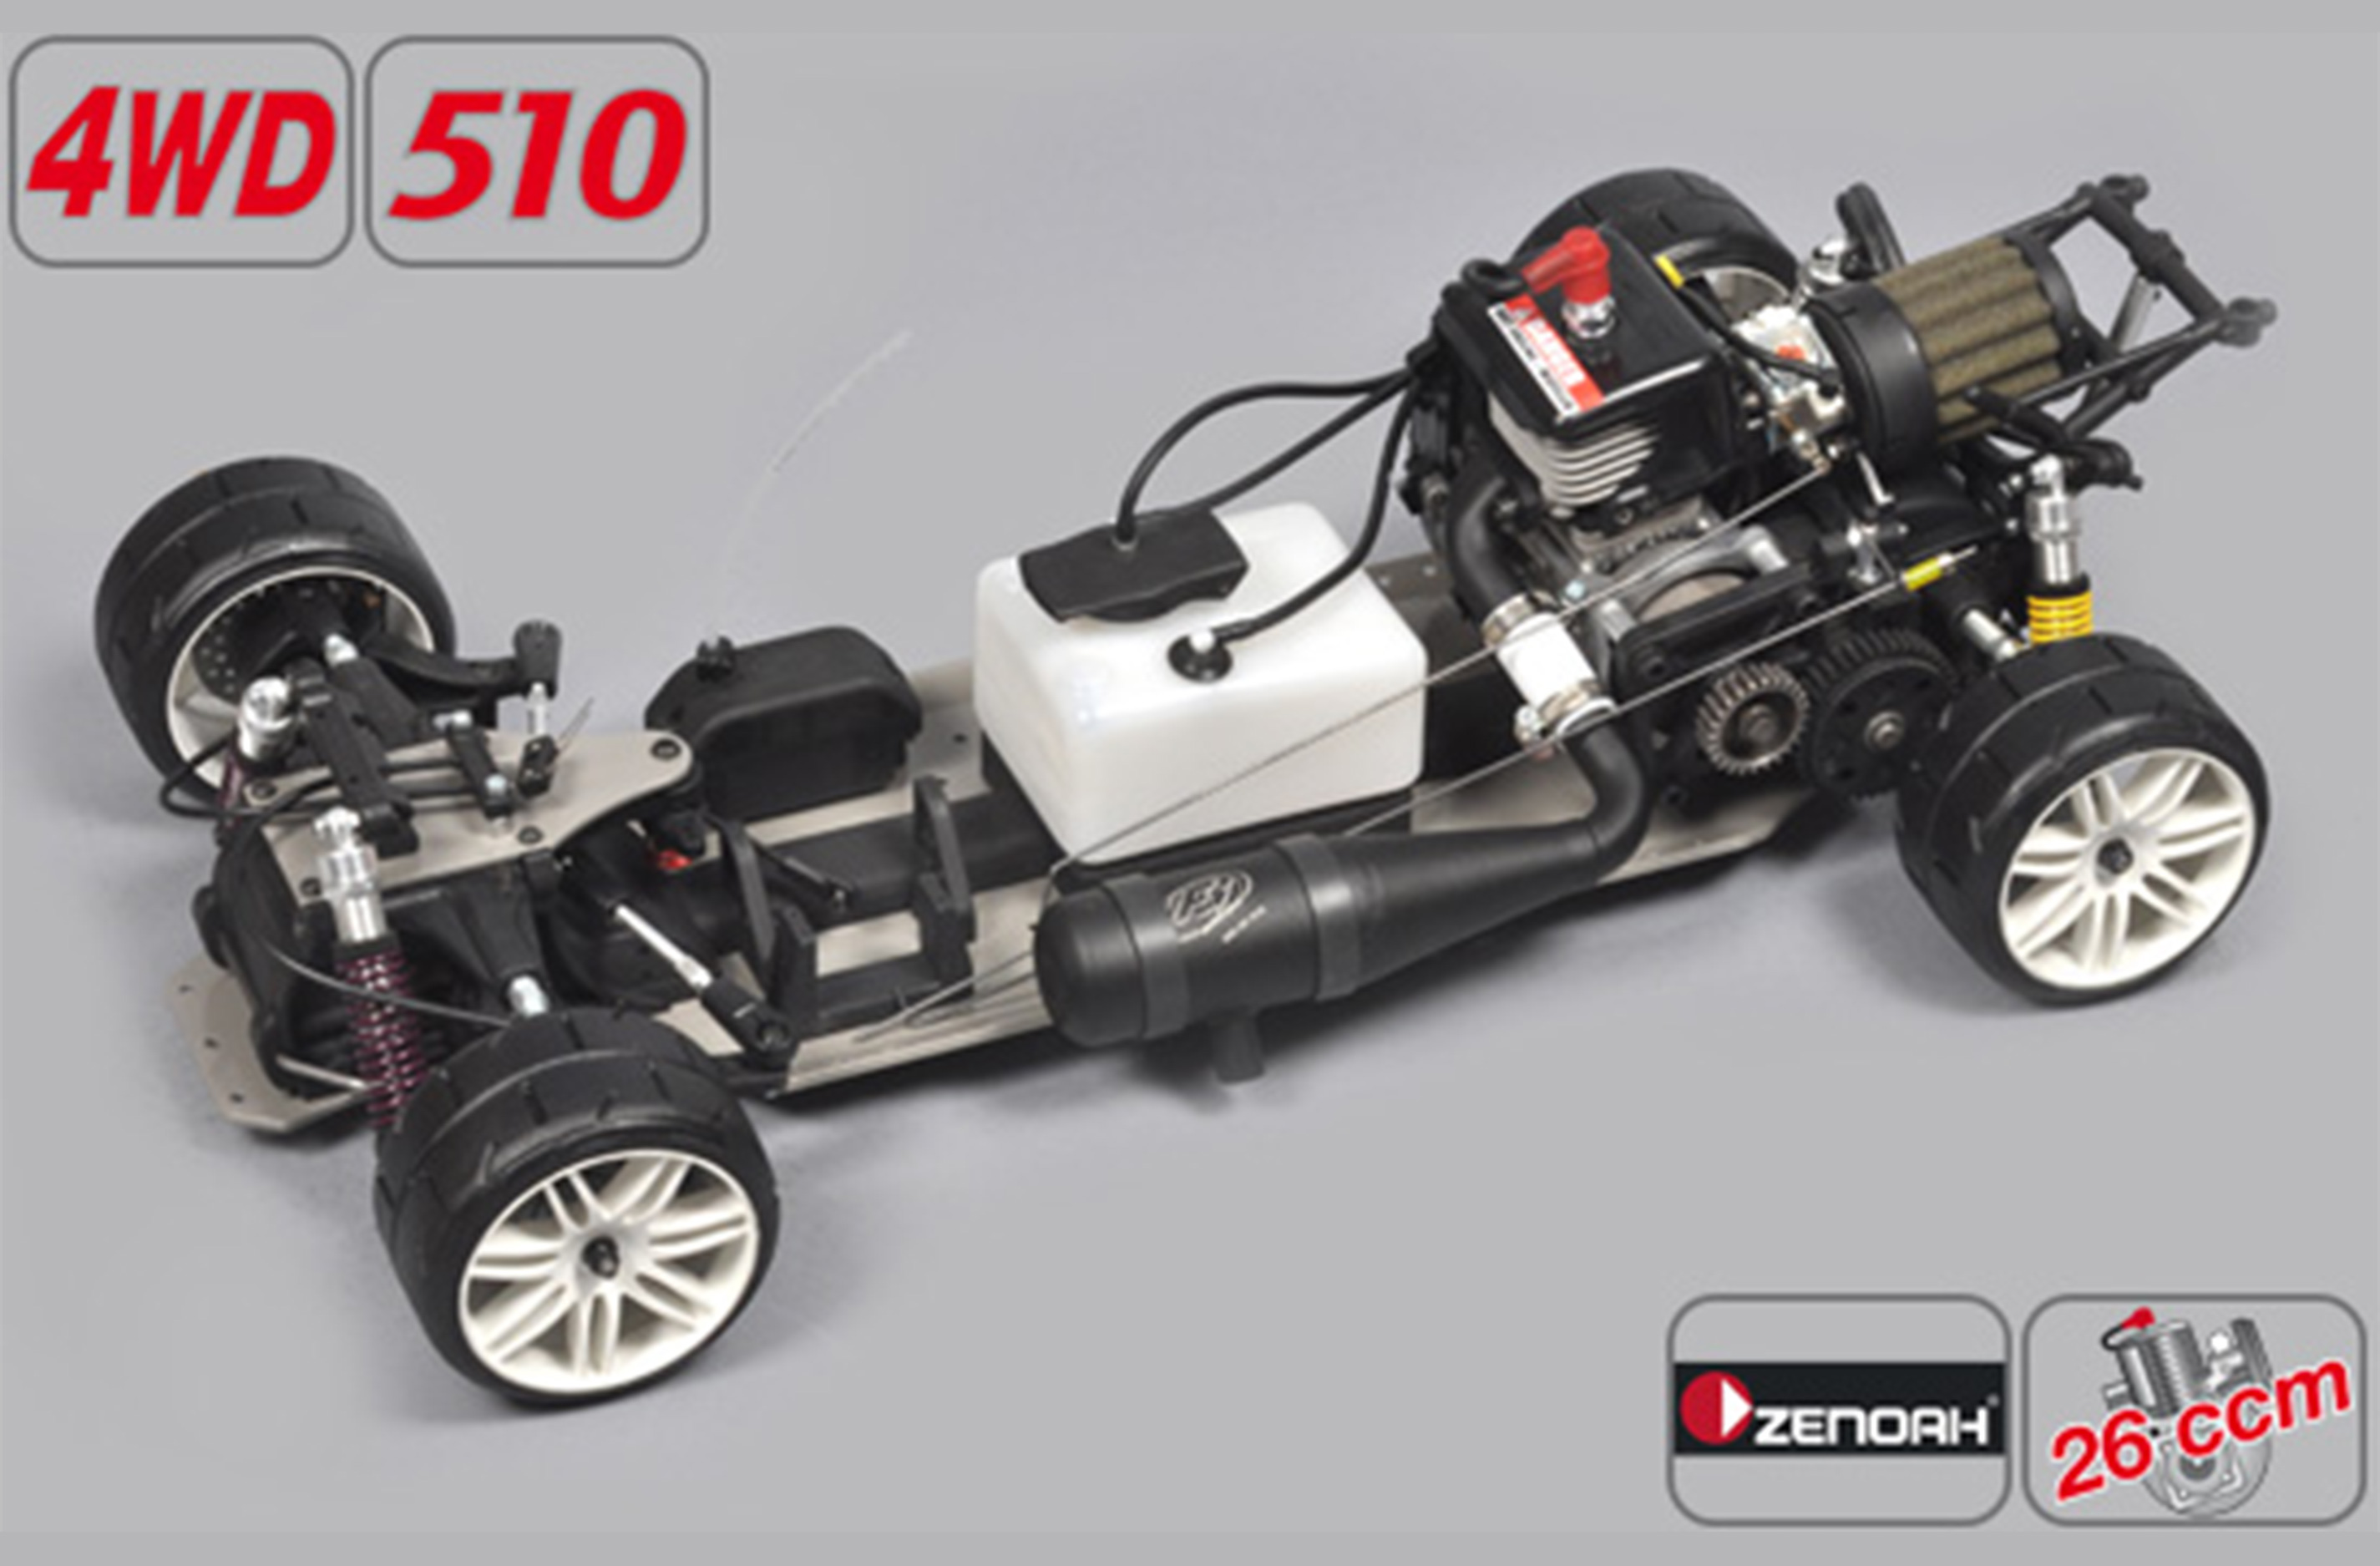 154200Z FG Sportsline 4WD 510er Radstand, Zenoah G260 Motor